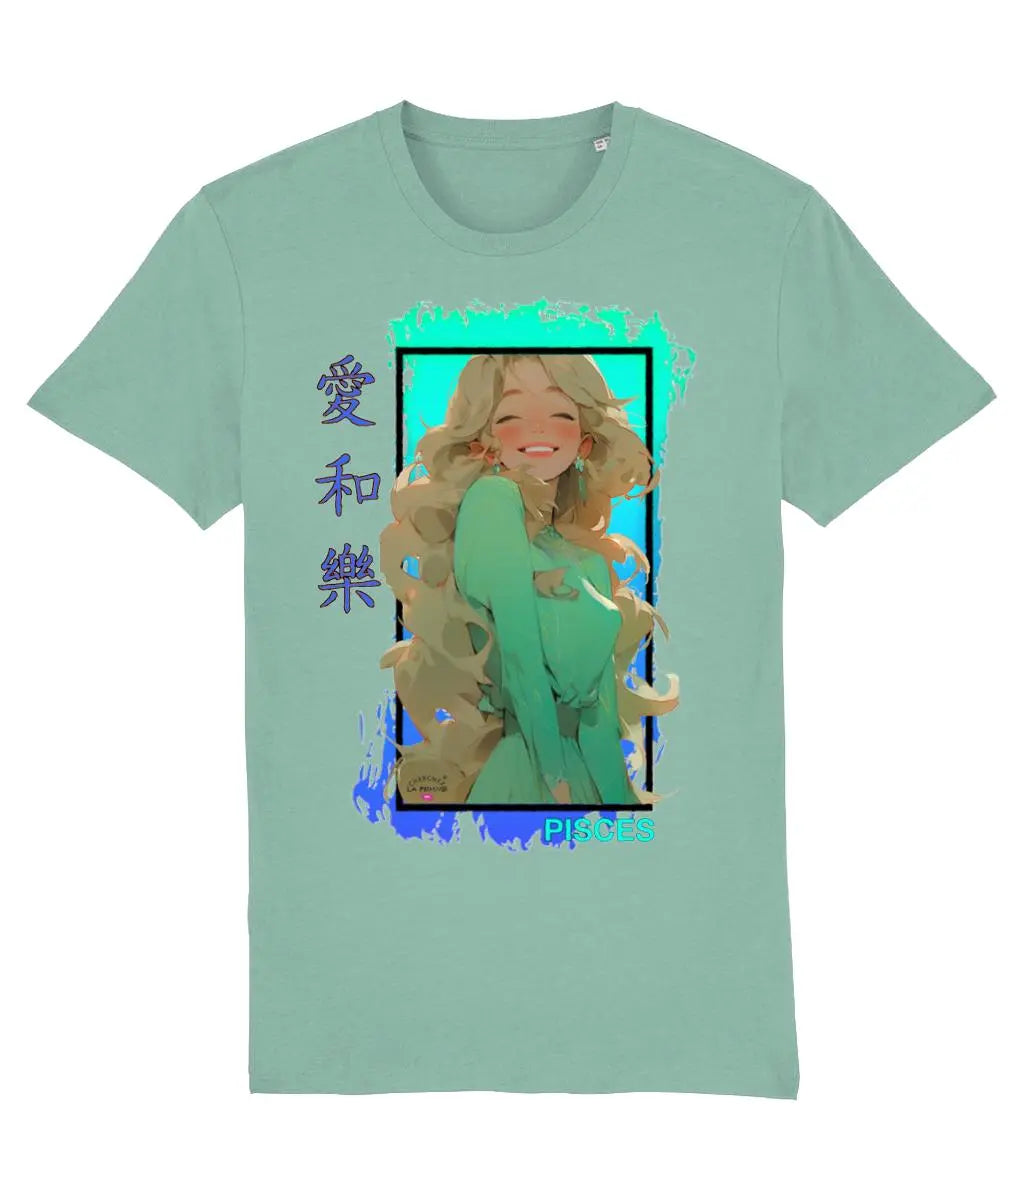 Pisces Anime Inspired Organic T-Shirt Cherchez La Femme brand